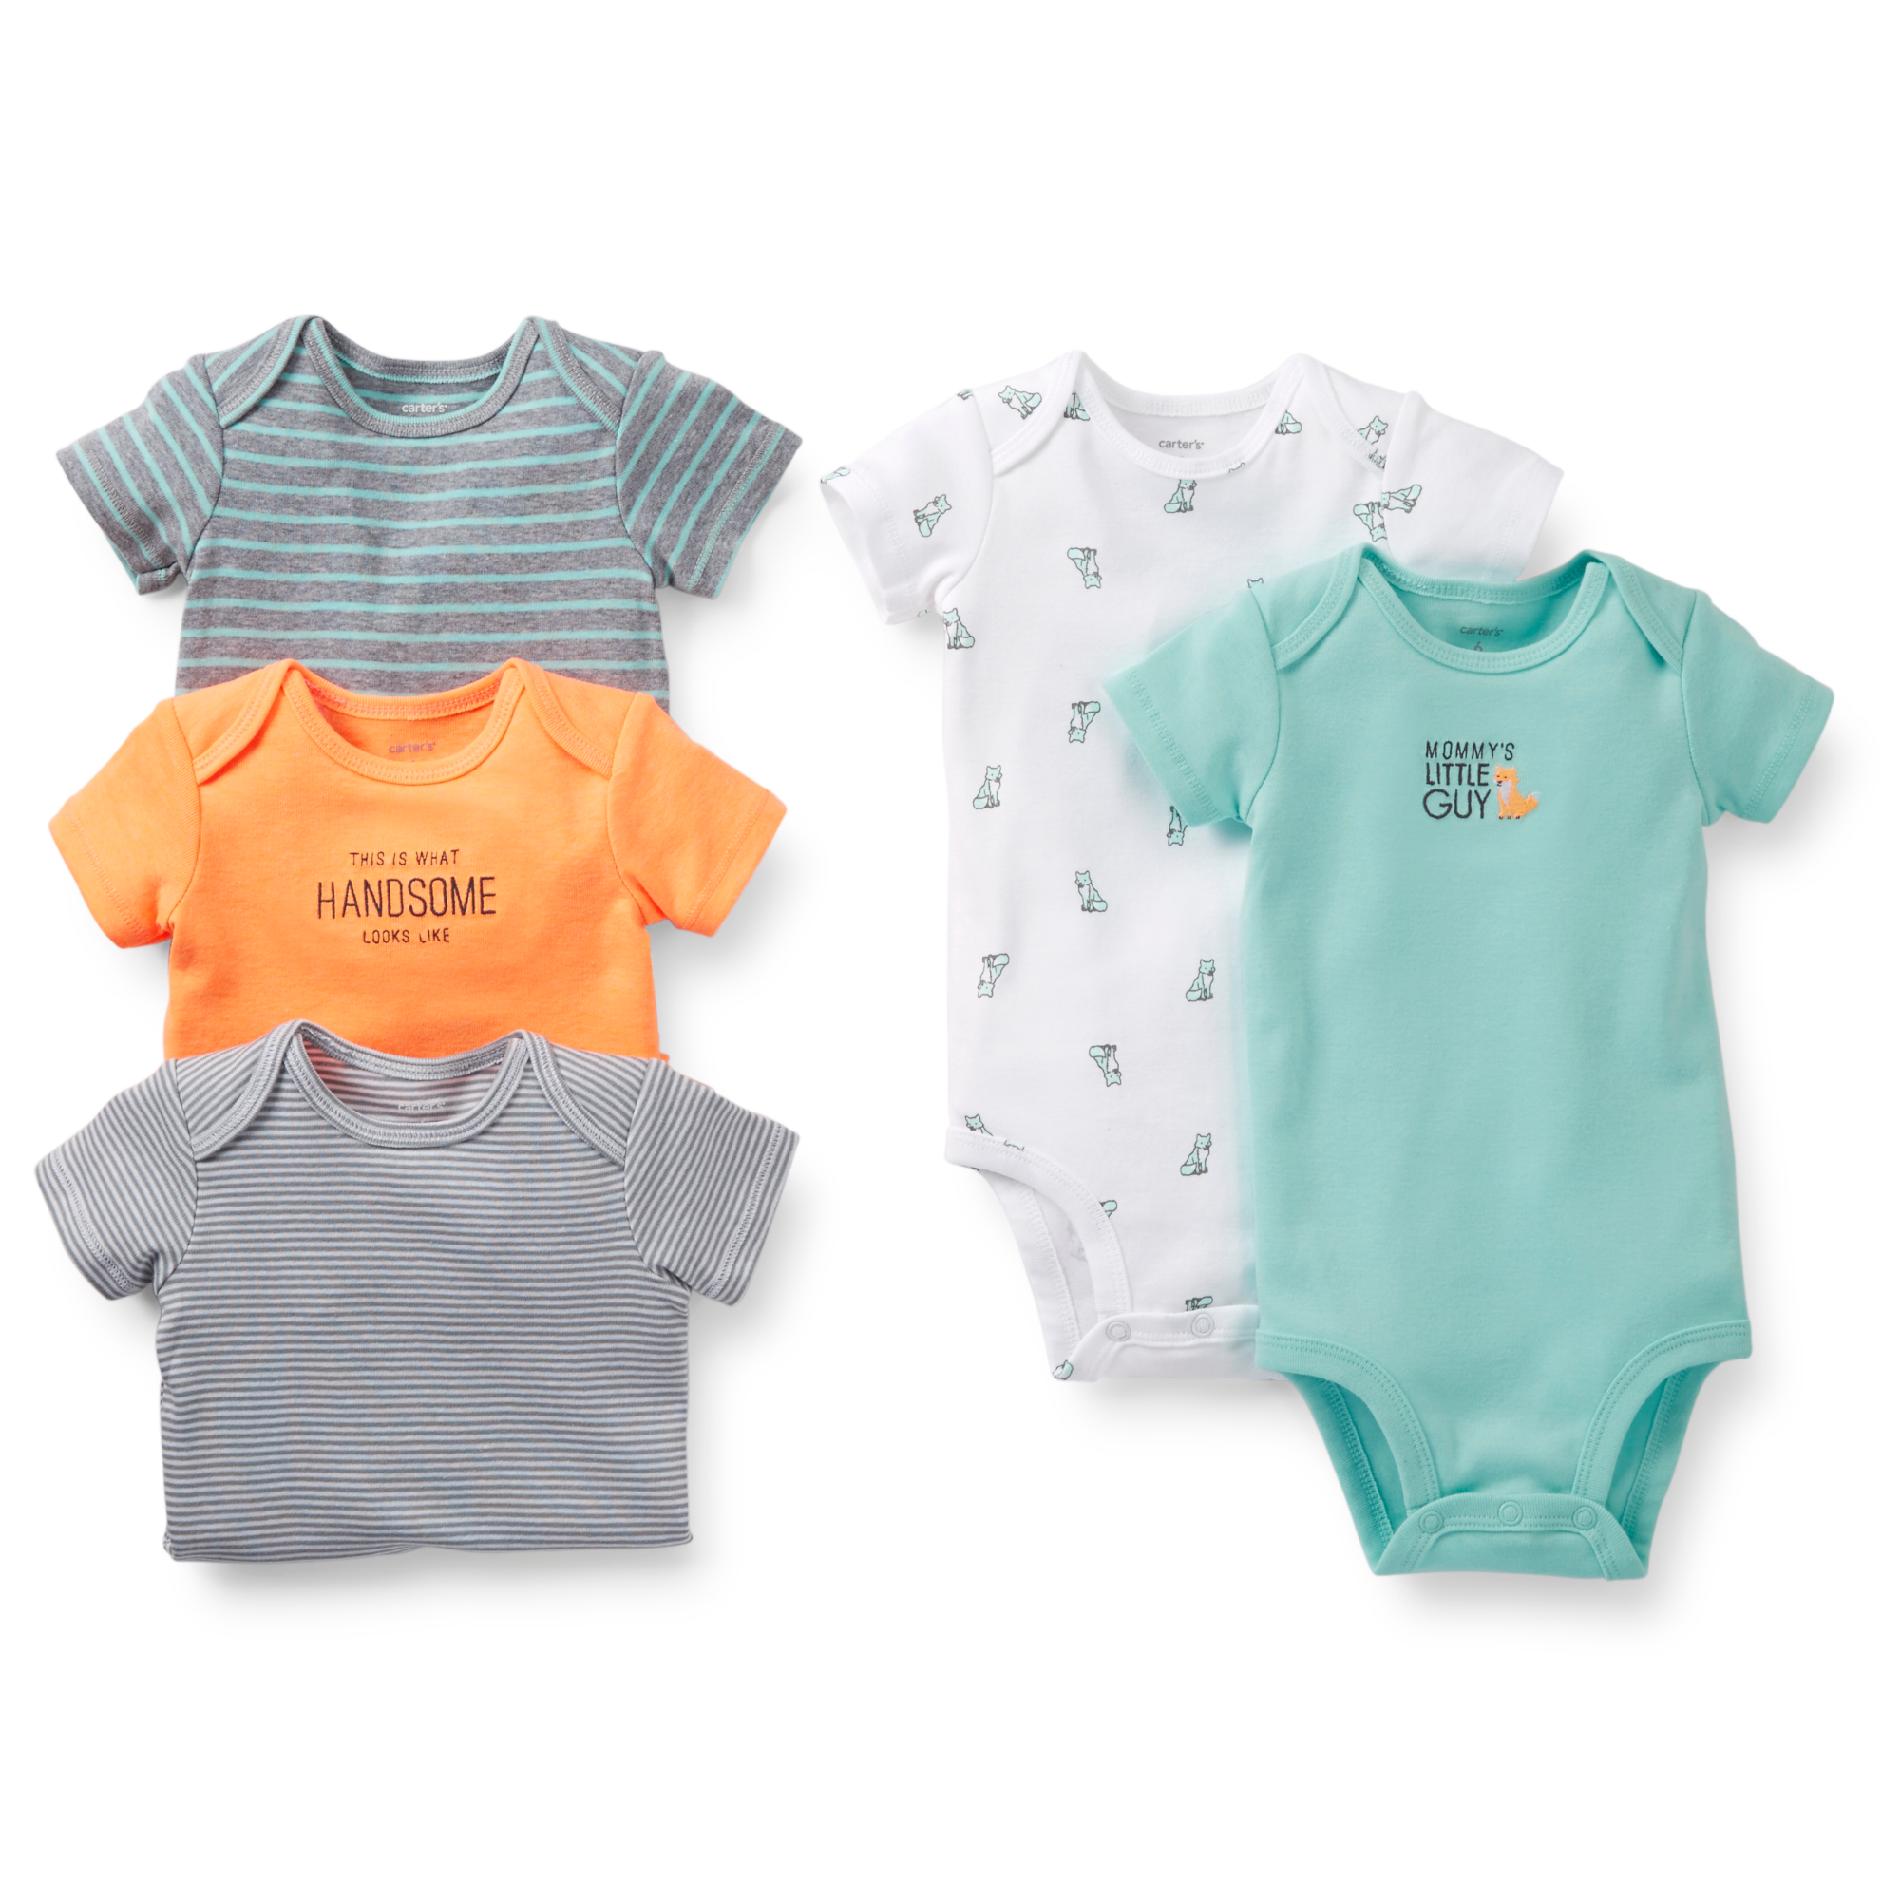 Carter's Newborn & Infant Boy's 5-pack 'Handsome' Bodysuits